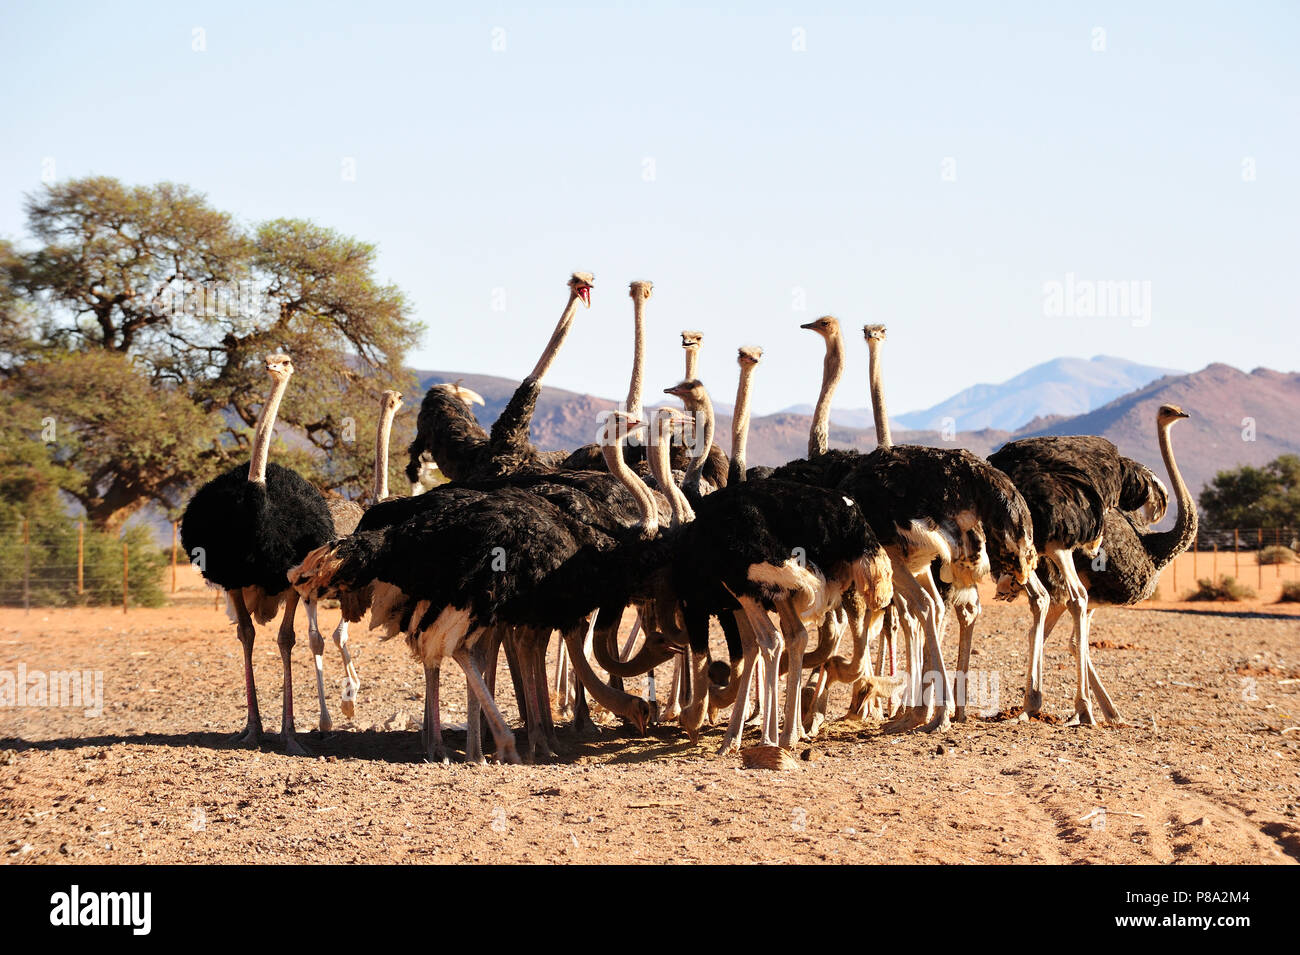 South African avestruces (Struthio camelus australis) en una granja de avestruces alimentando, Montañas, Granja Koiimasis Tiras, Namibia Foto de stock